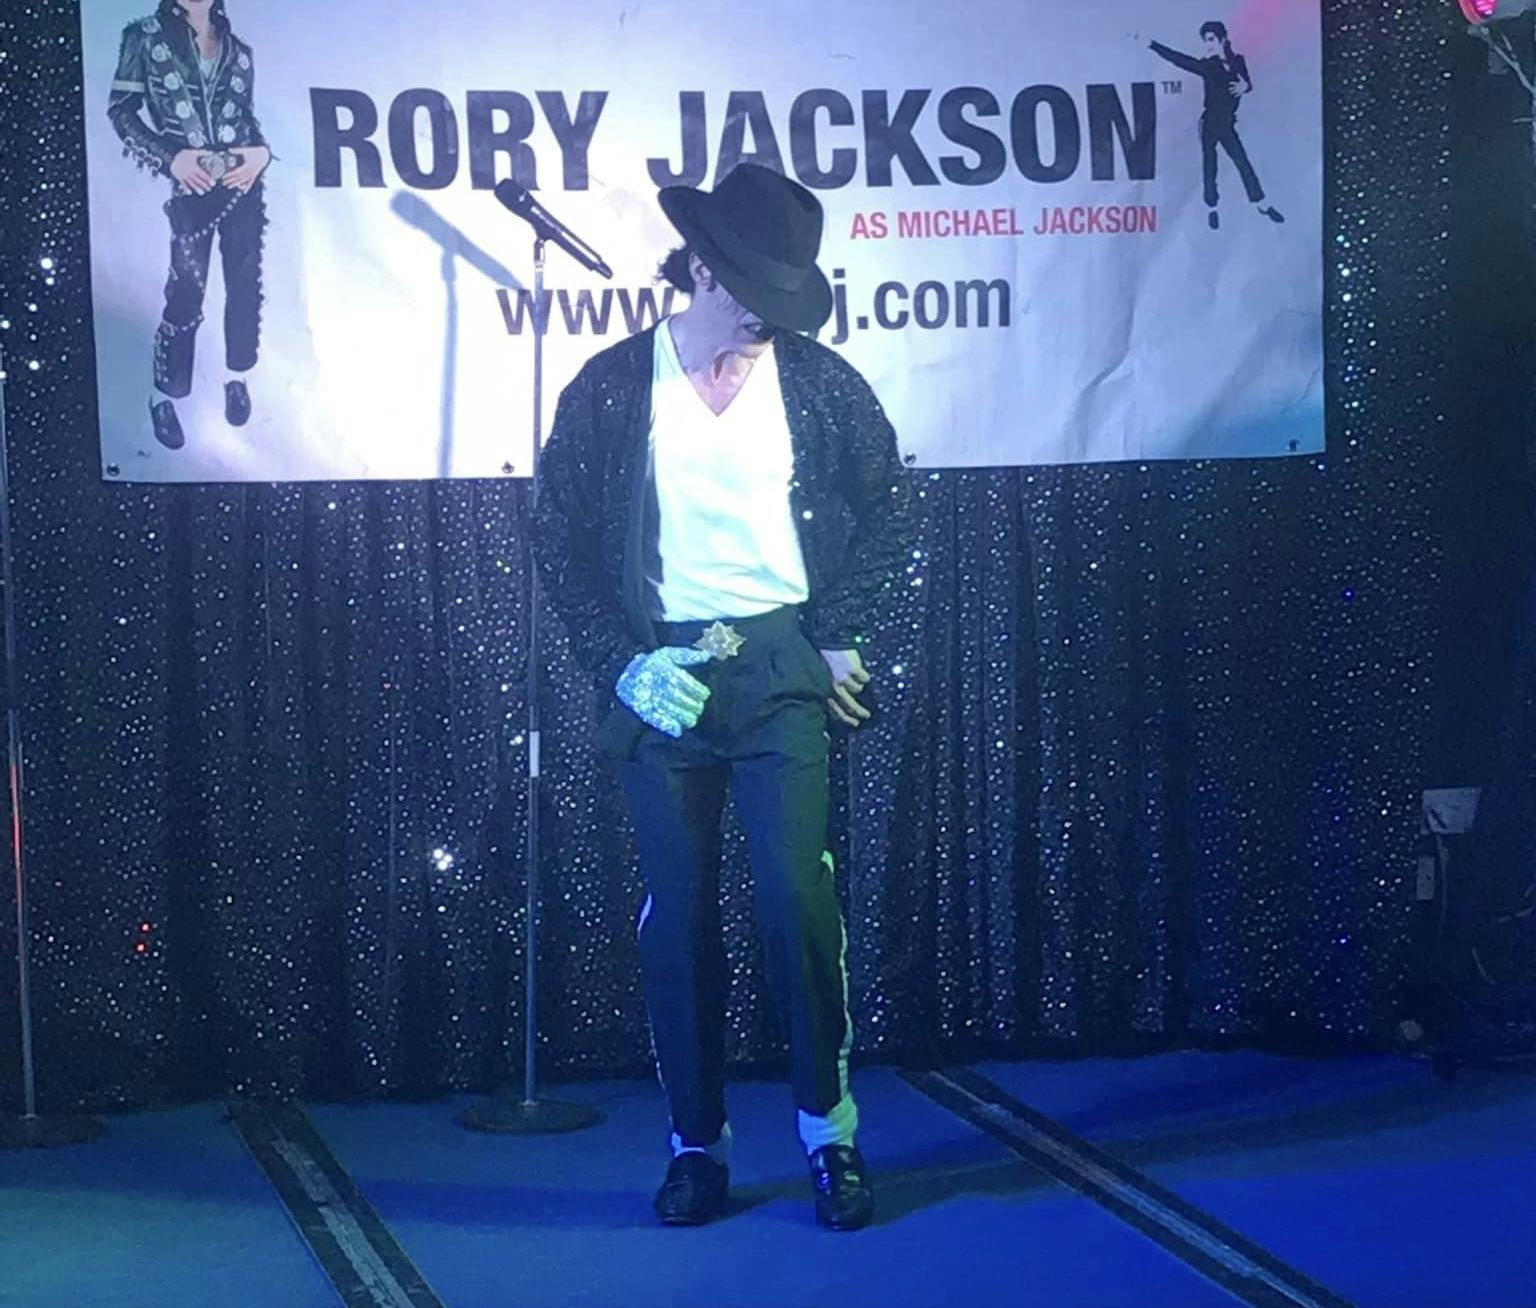 Rory Jackson as Michael Jackson - Billie Jean Dance